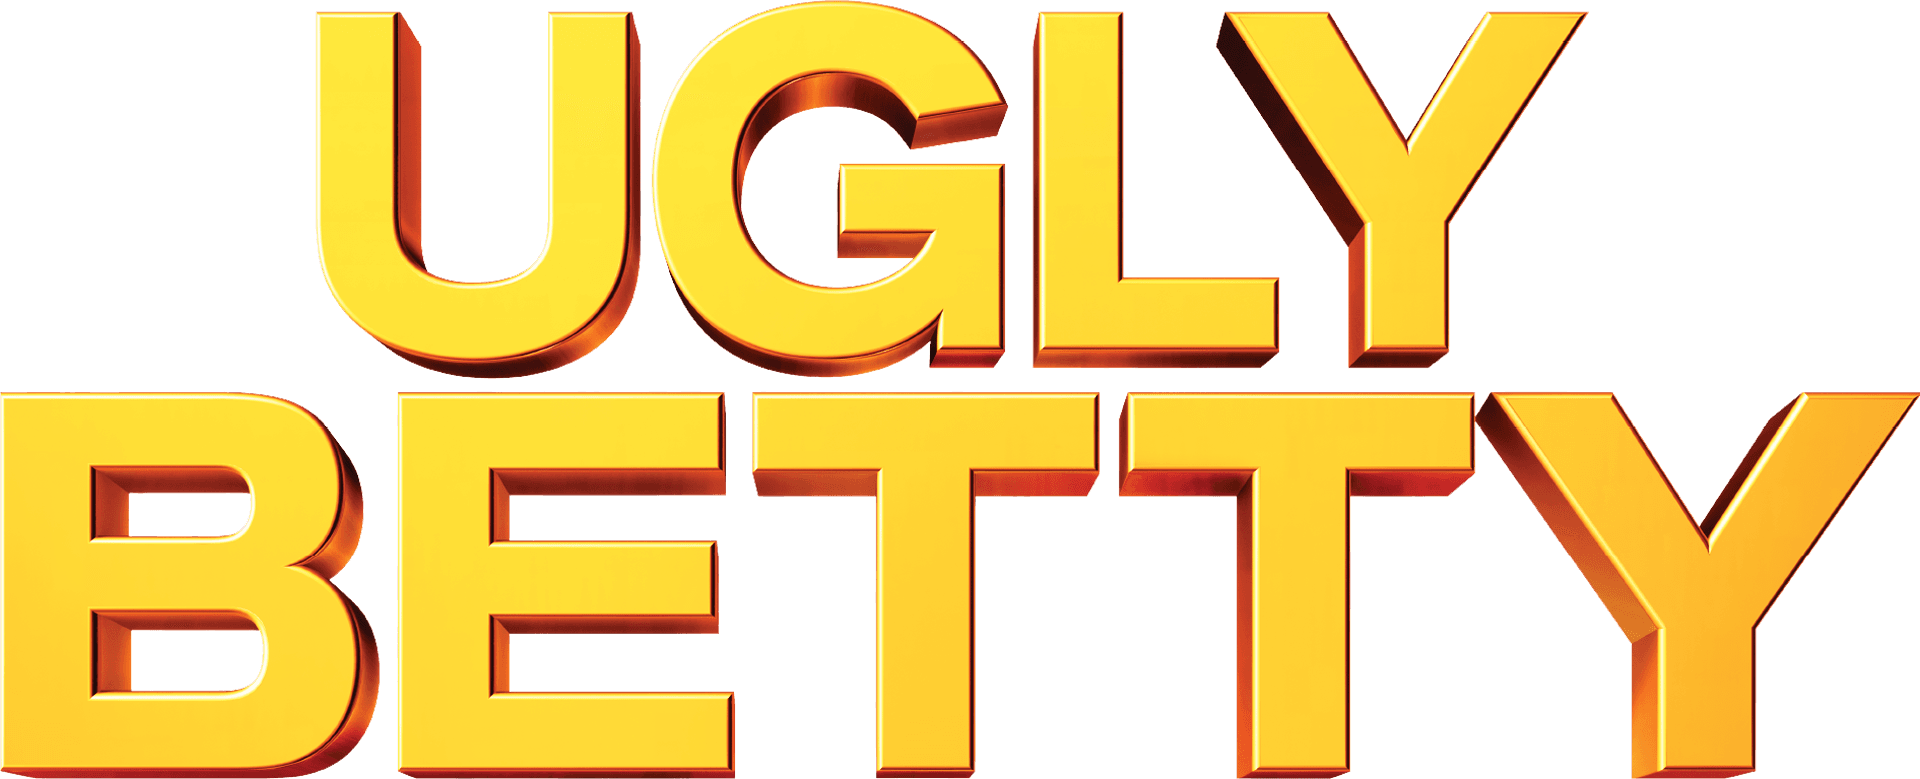 Ugly Betty logo